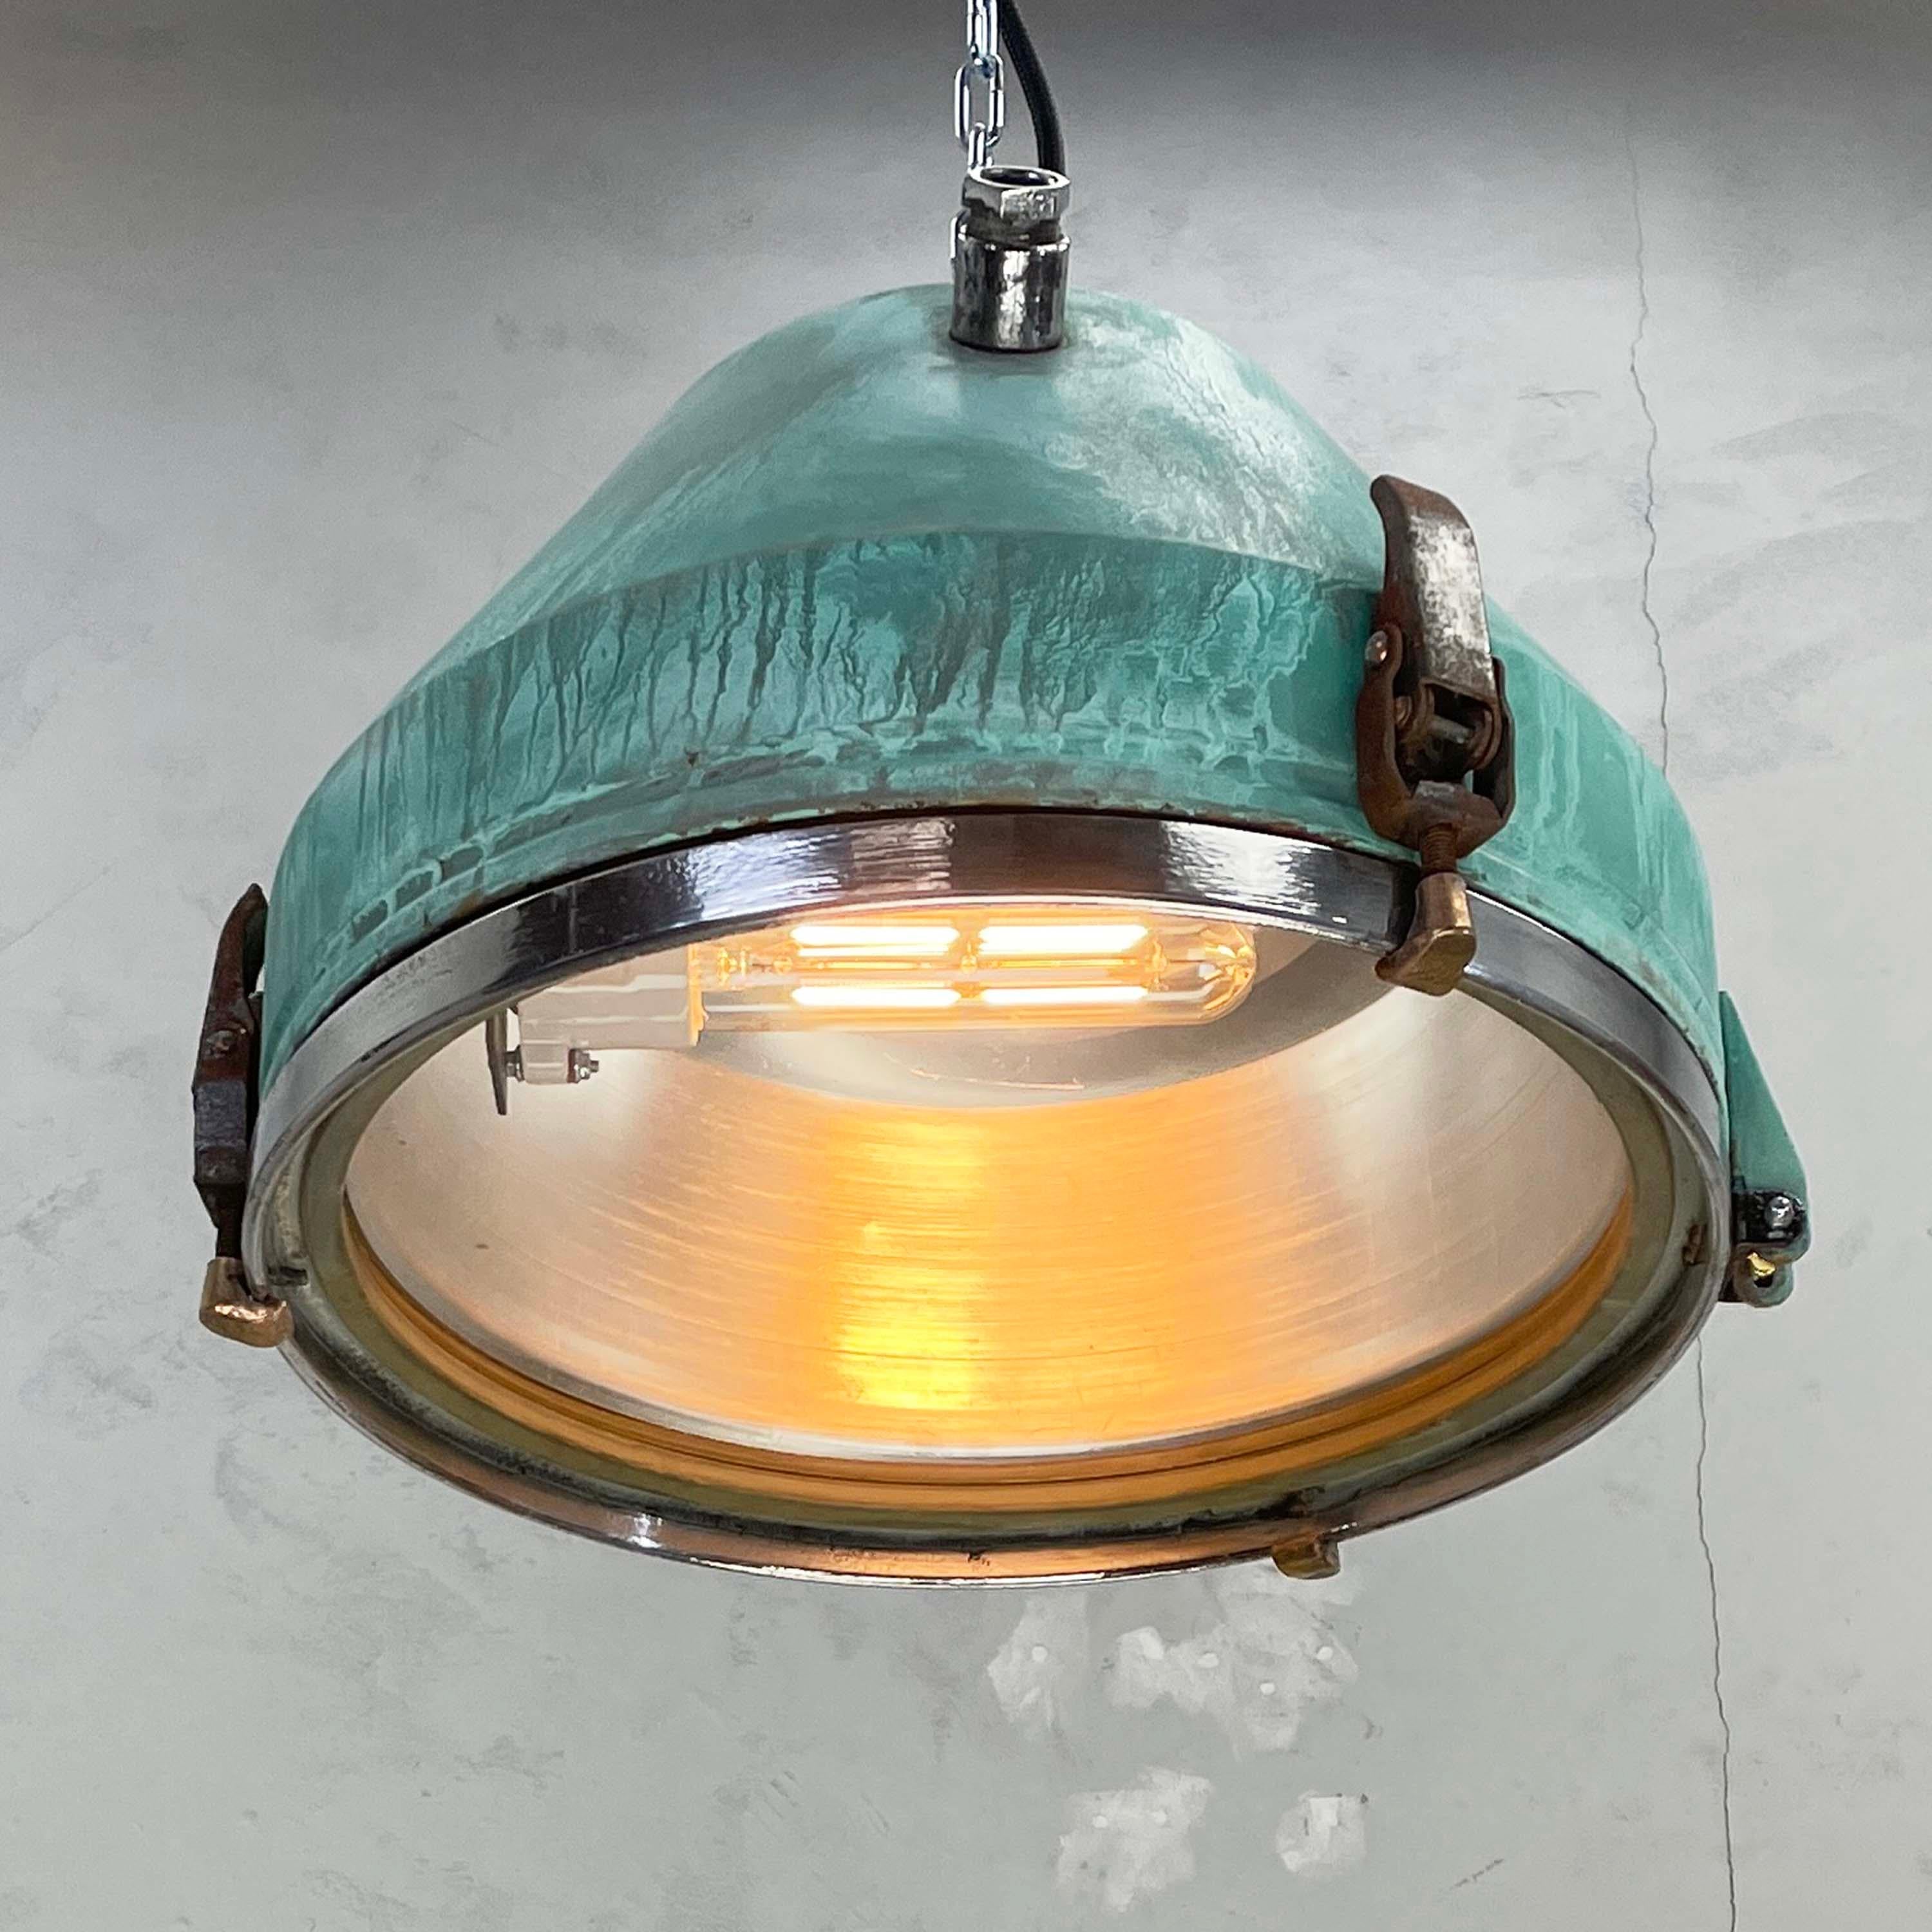 1970's German VEB Steel & Copper Verdigris Industrial Pendant Lamp, Teal Finish For Sale 1